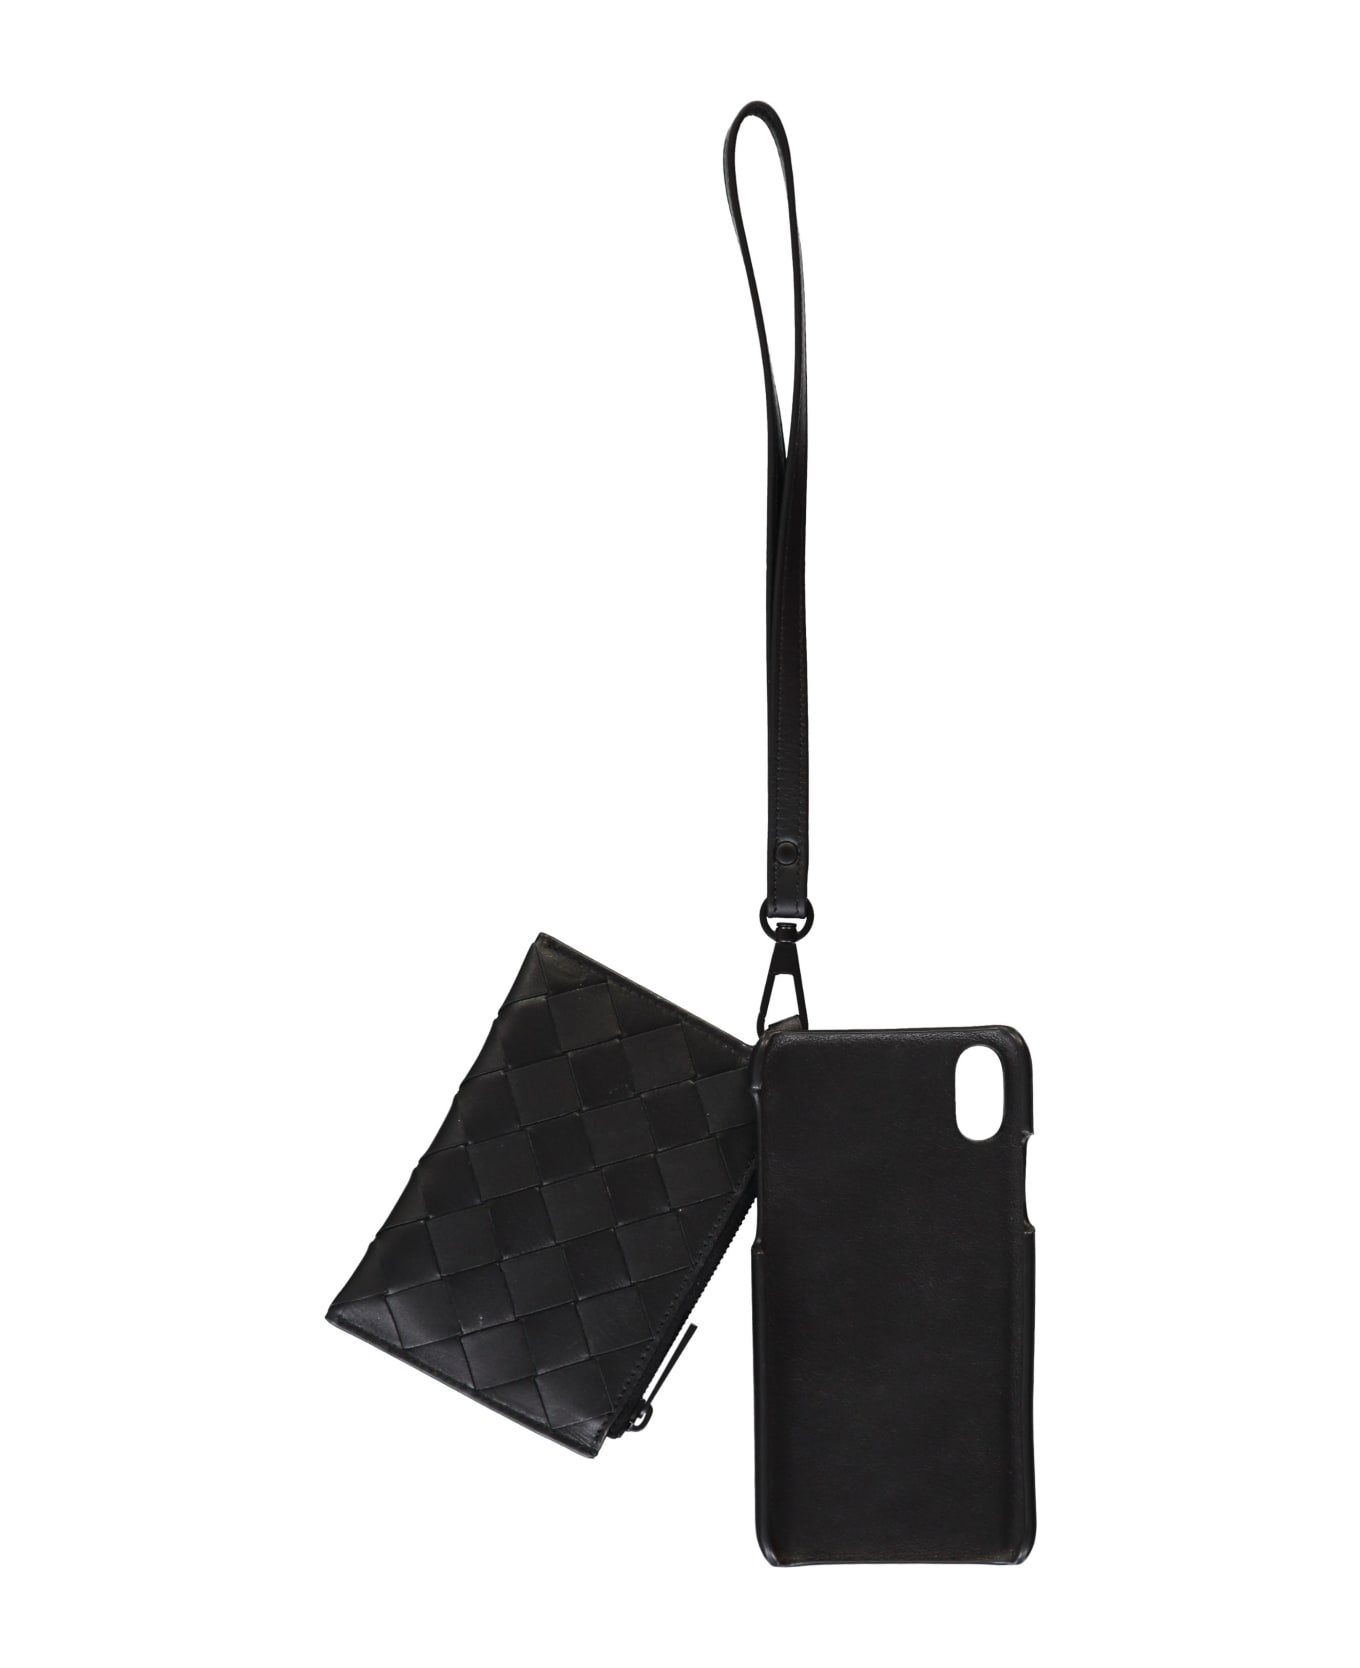 Bottega Veneta Iphone Case - black デジタルアクセサリー